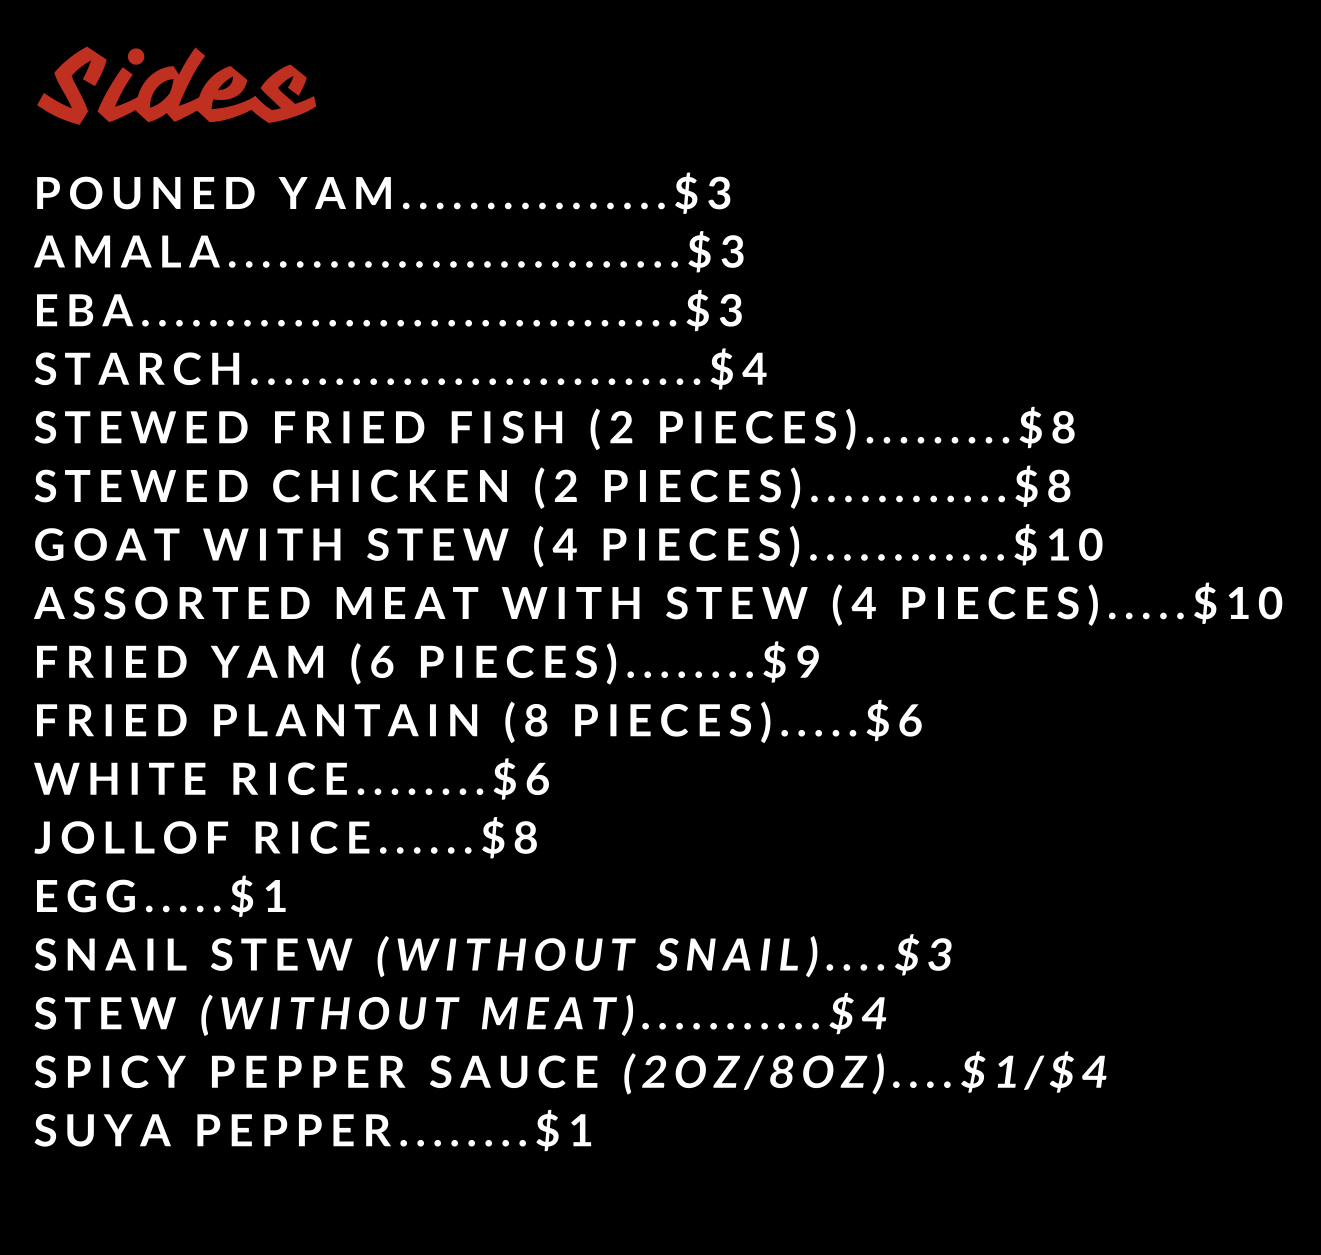 sides menu